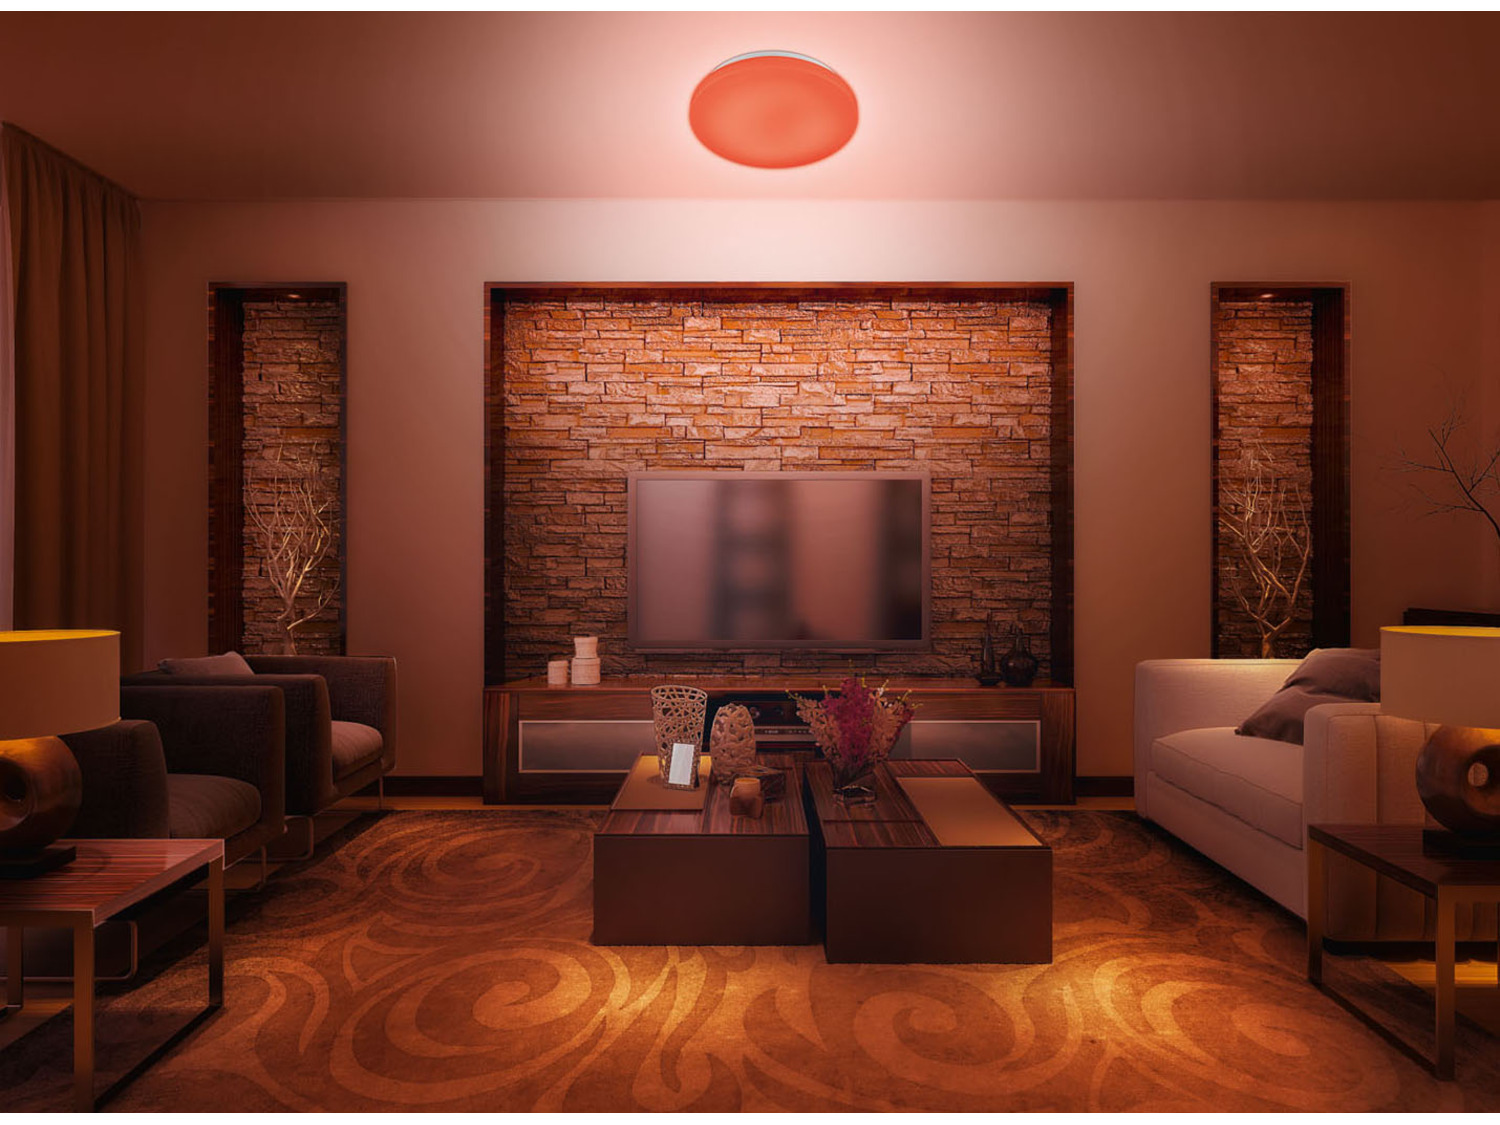 LIVARNO home LED Deckenleuchte, »Zigbee Smart Home«